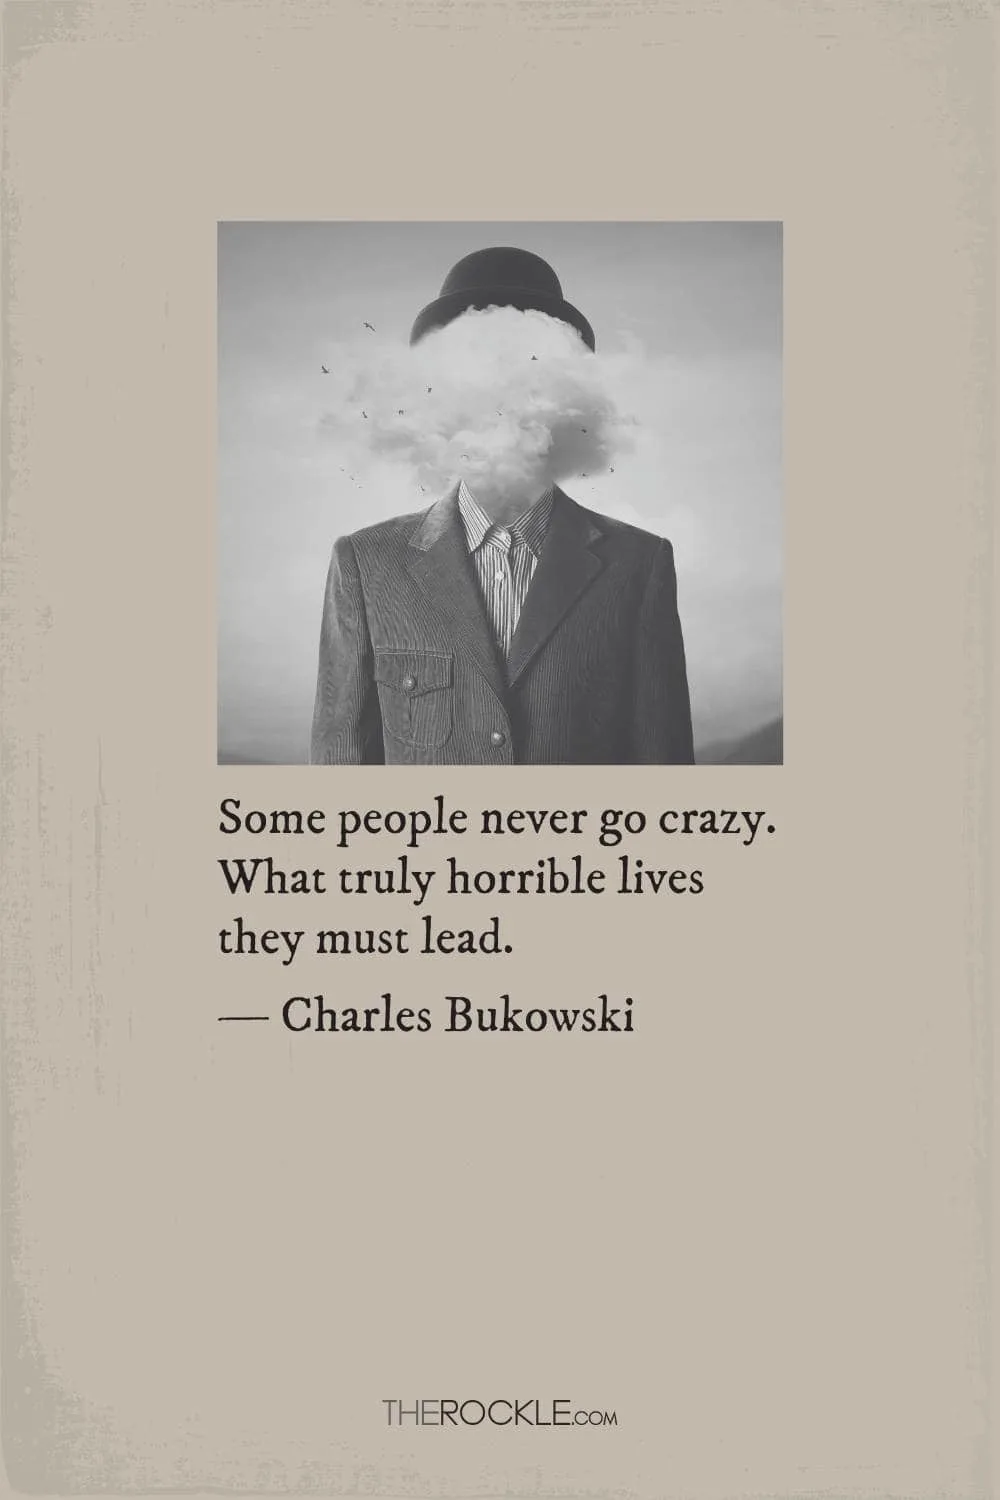 Bukowski on embracing madness or spontaneity